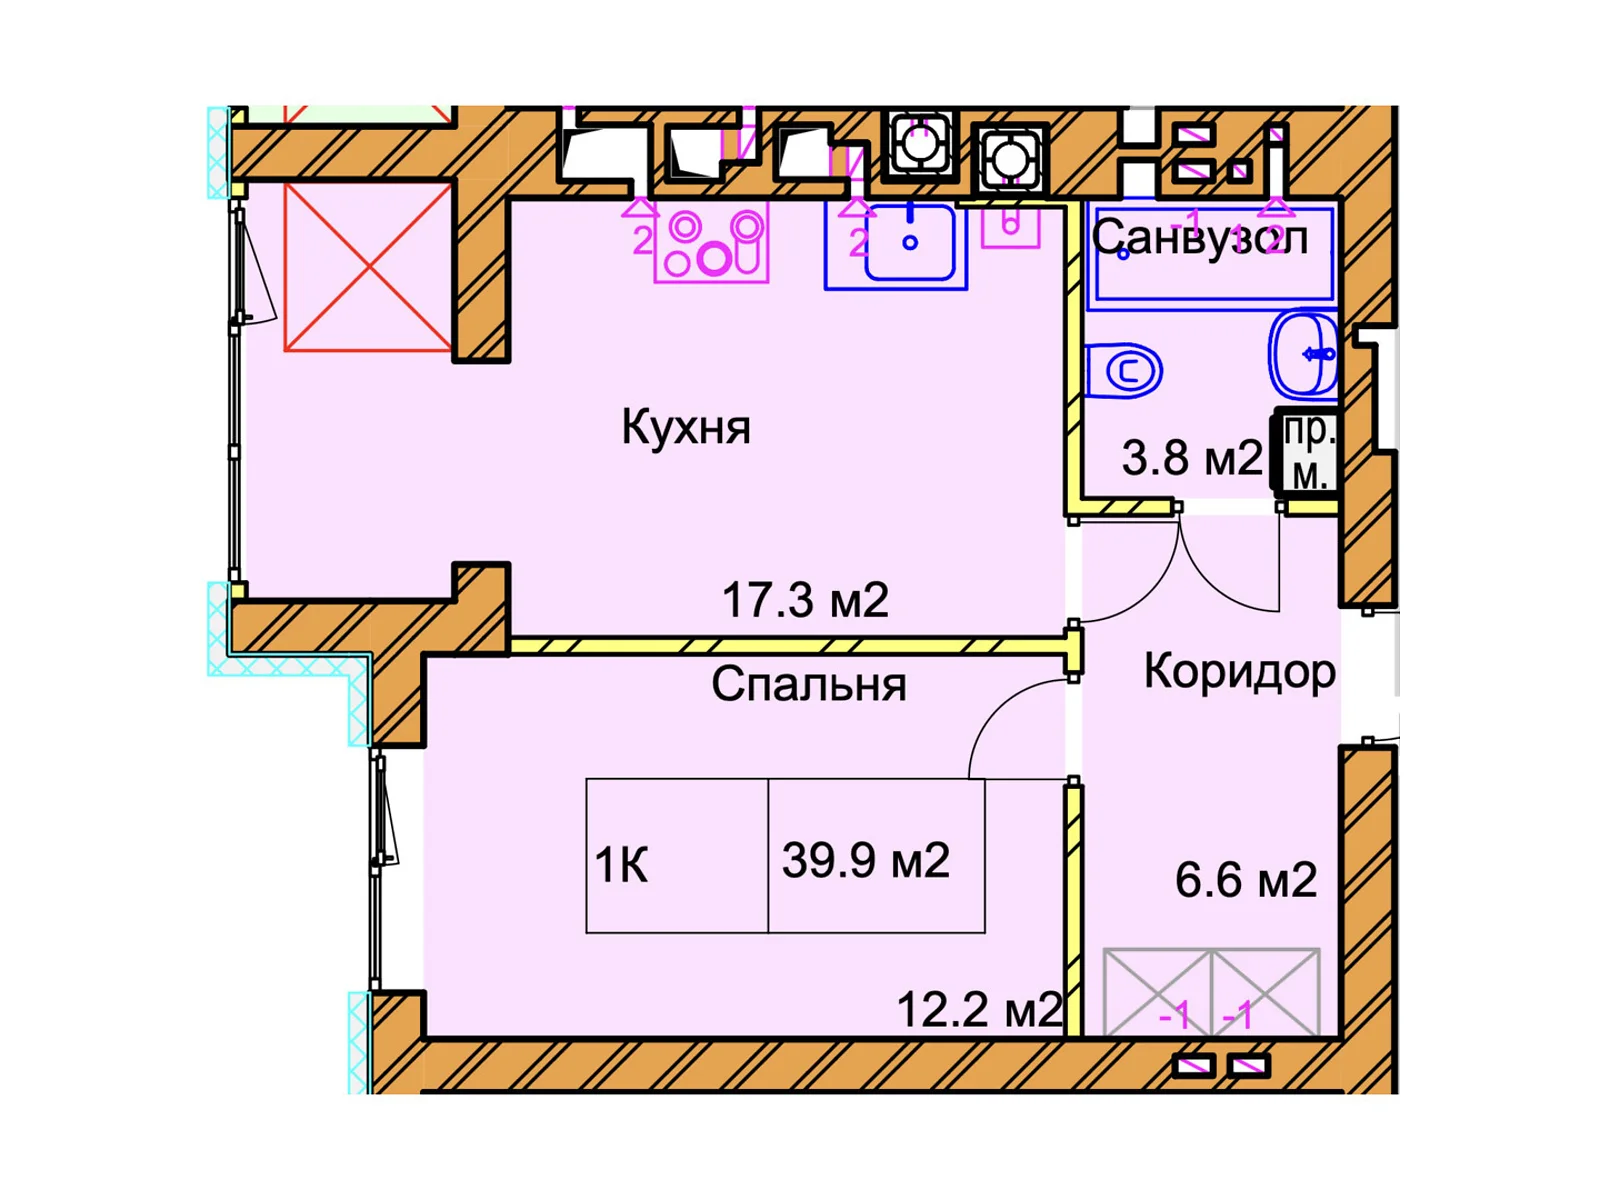 Продается 1-комнатная квартира 39.9 кв. м в Ровно, цена: 39100 $ - фото 1